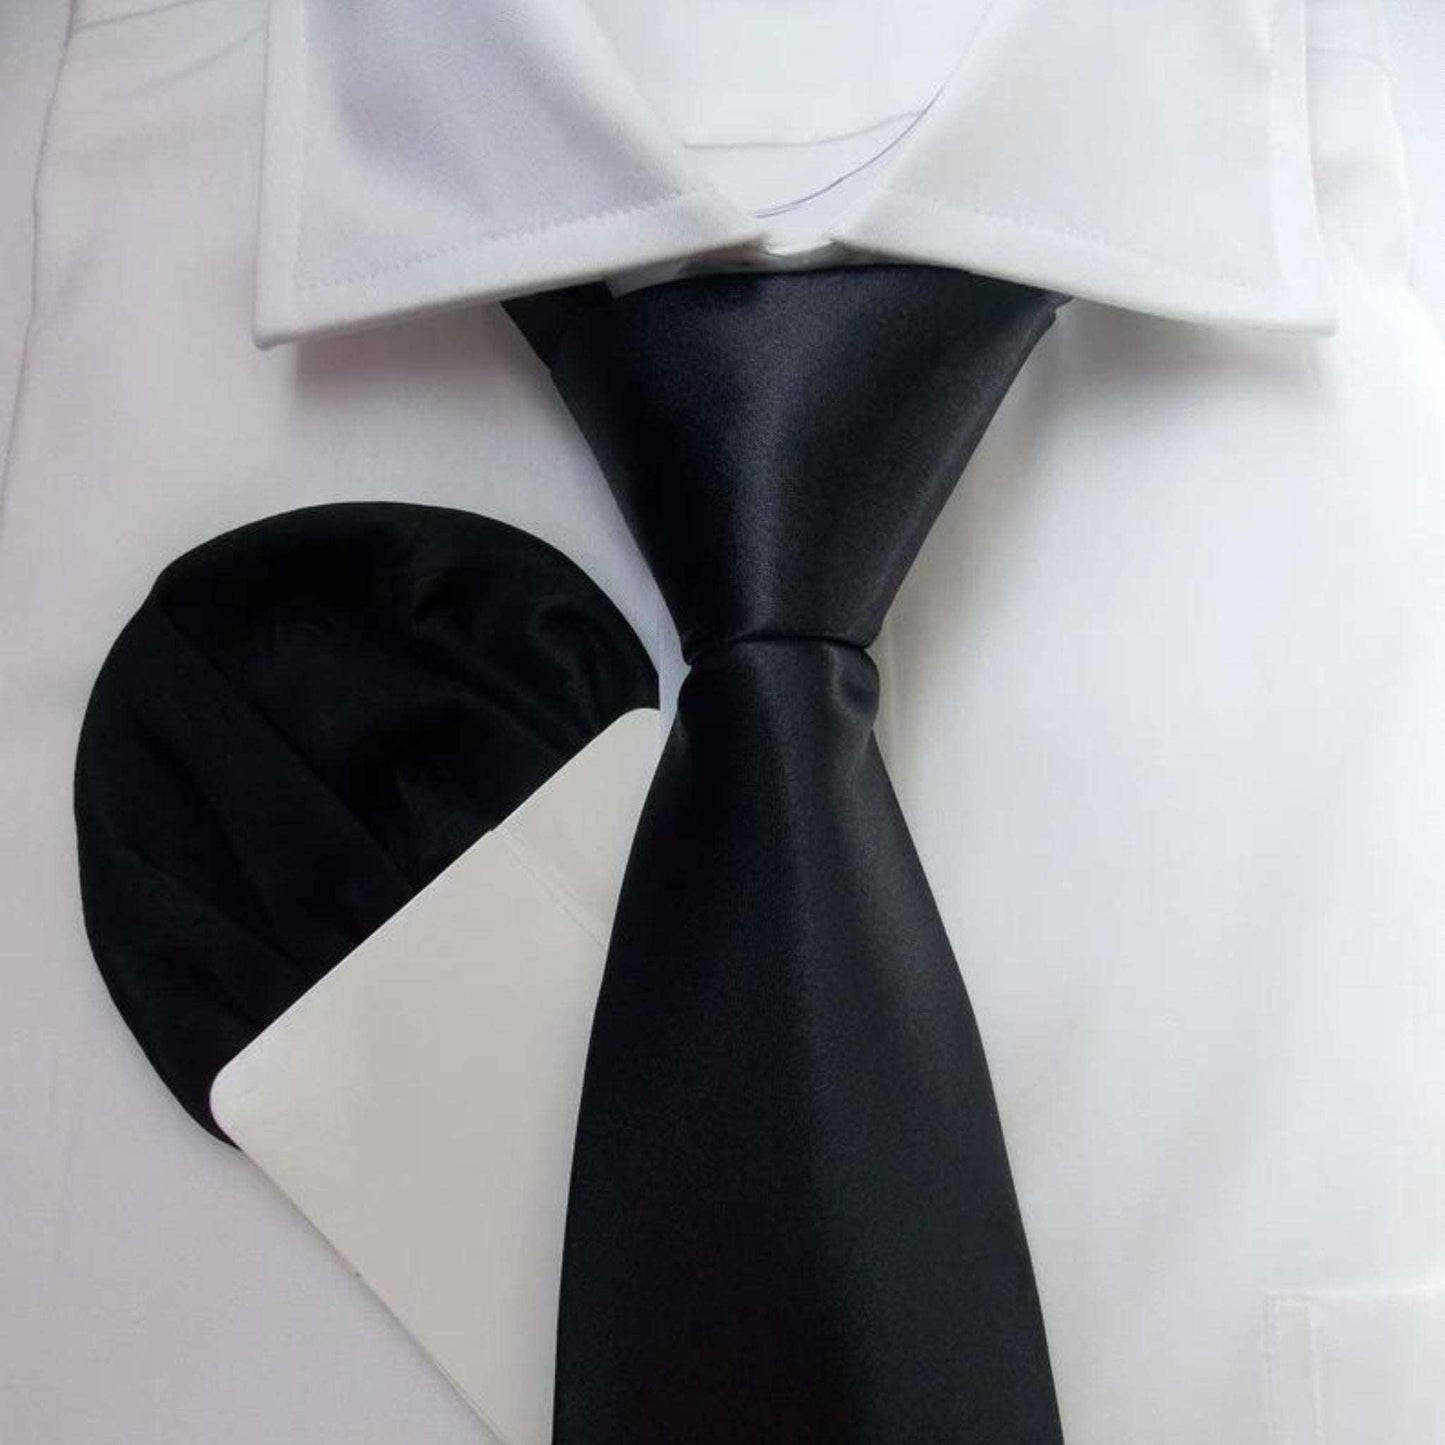 YOUTH ROBE's Premium Tie (Black) - YOUTH ROBE